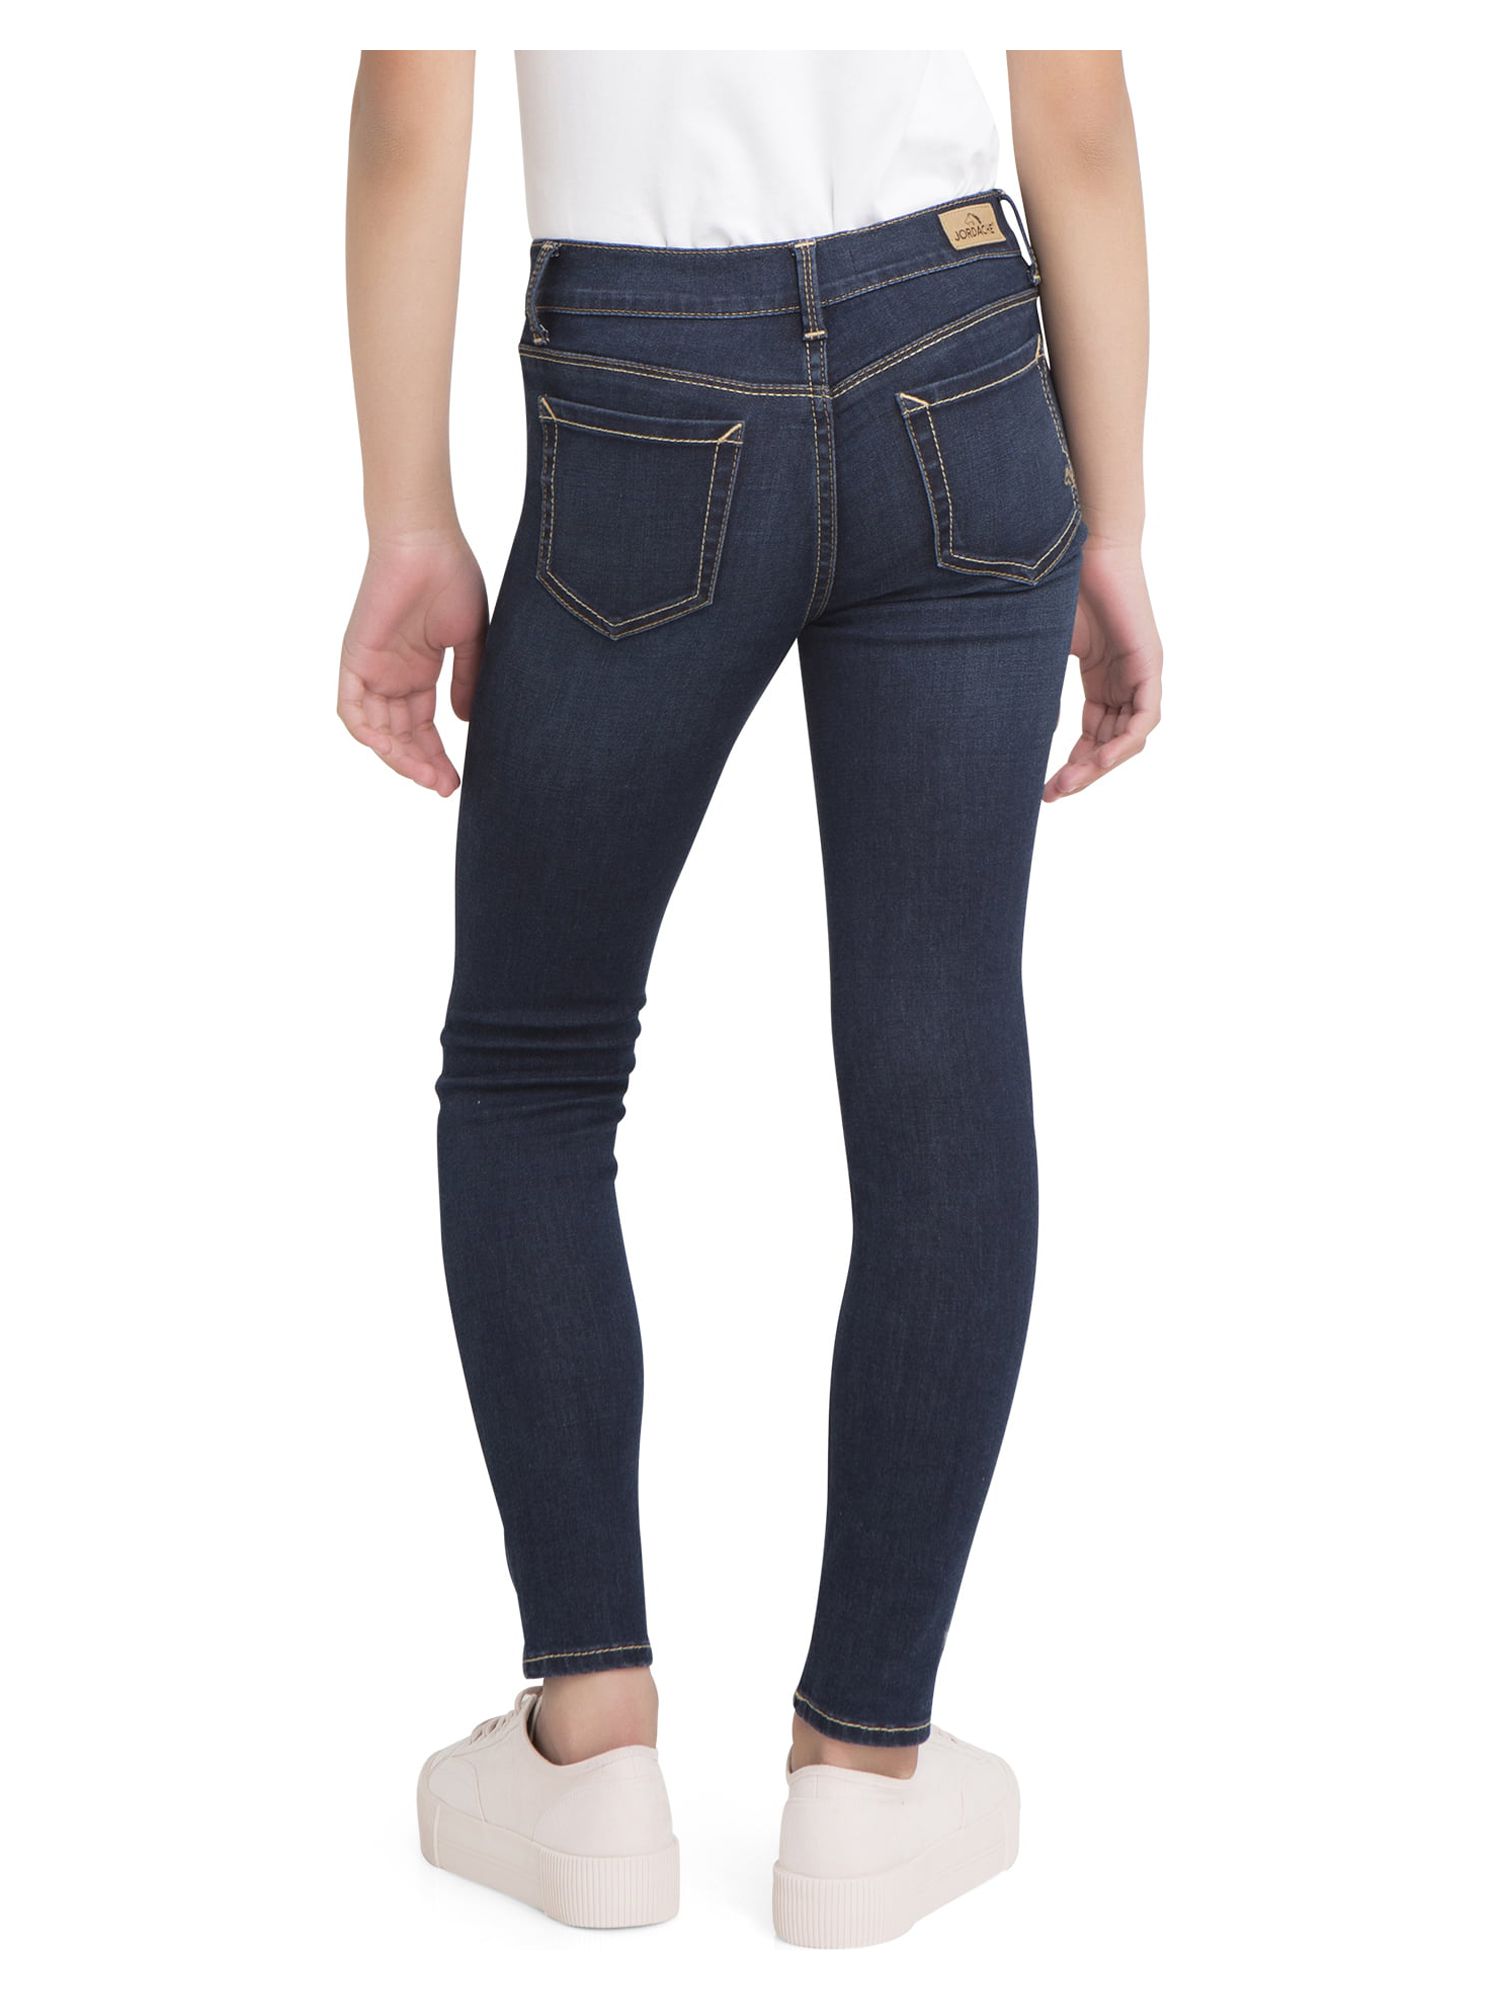 Jordache Girls Super Skinny Power Stretch Jeans, Sizes 5-18 - image 3 of 3